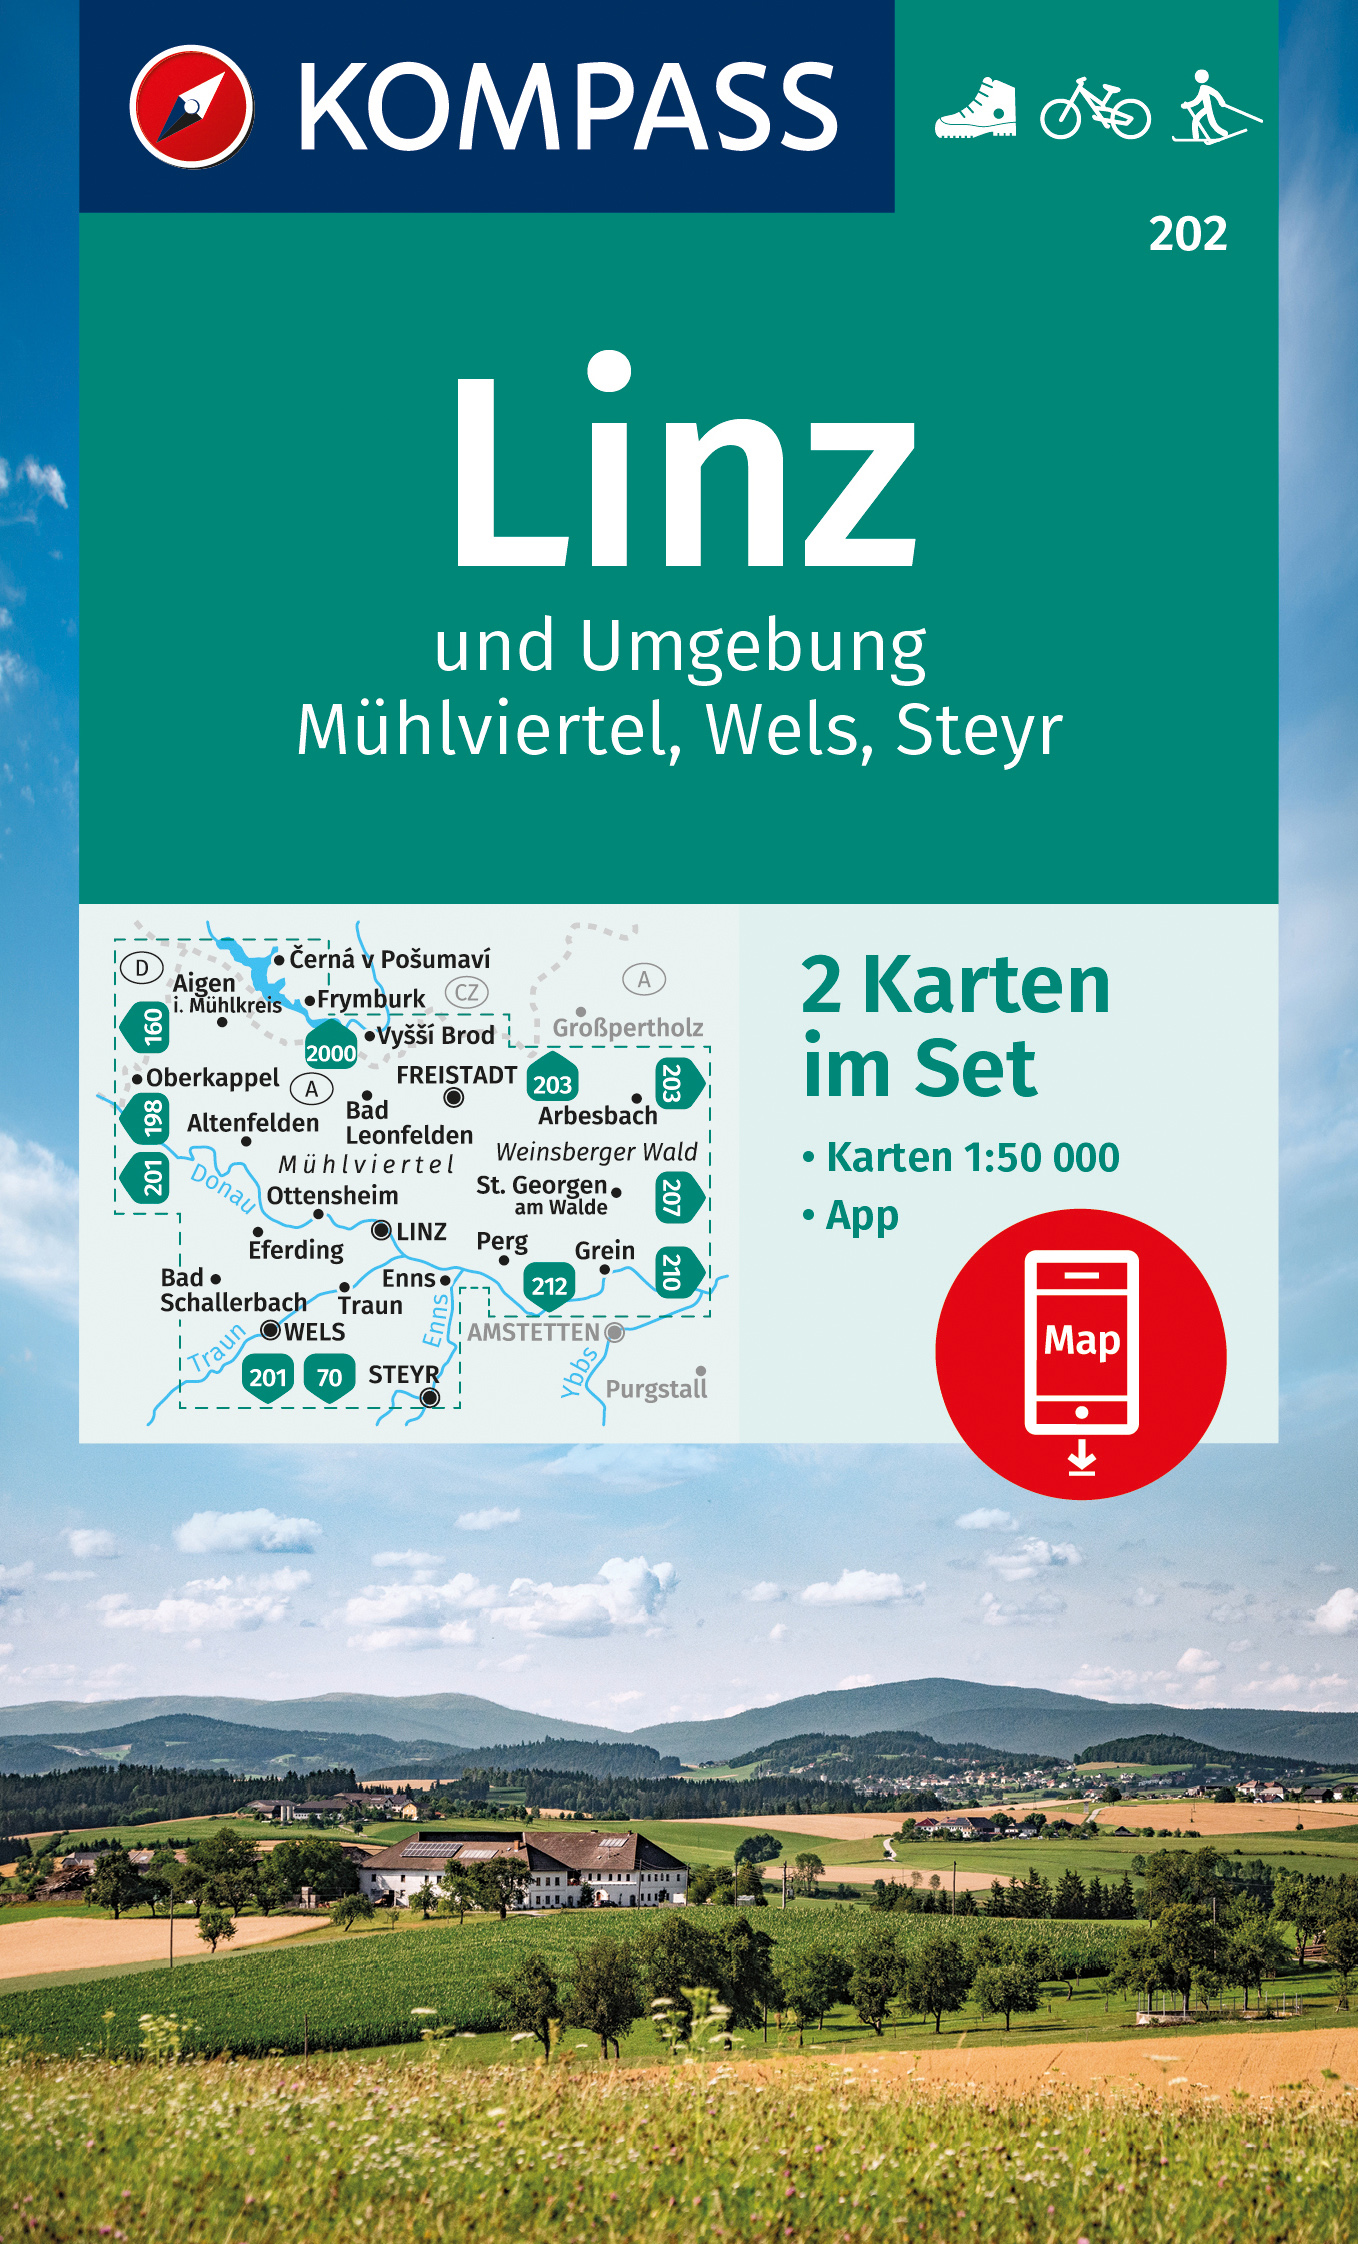 Linz a okolí, Mühlviertel, Wells, Steyr (Kompass č. 202) - turistická mapa